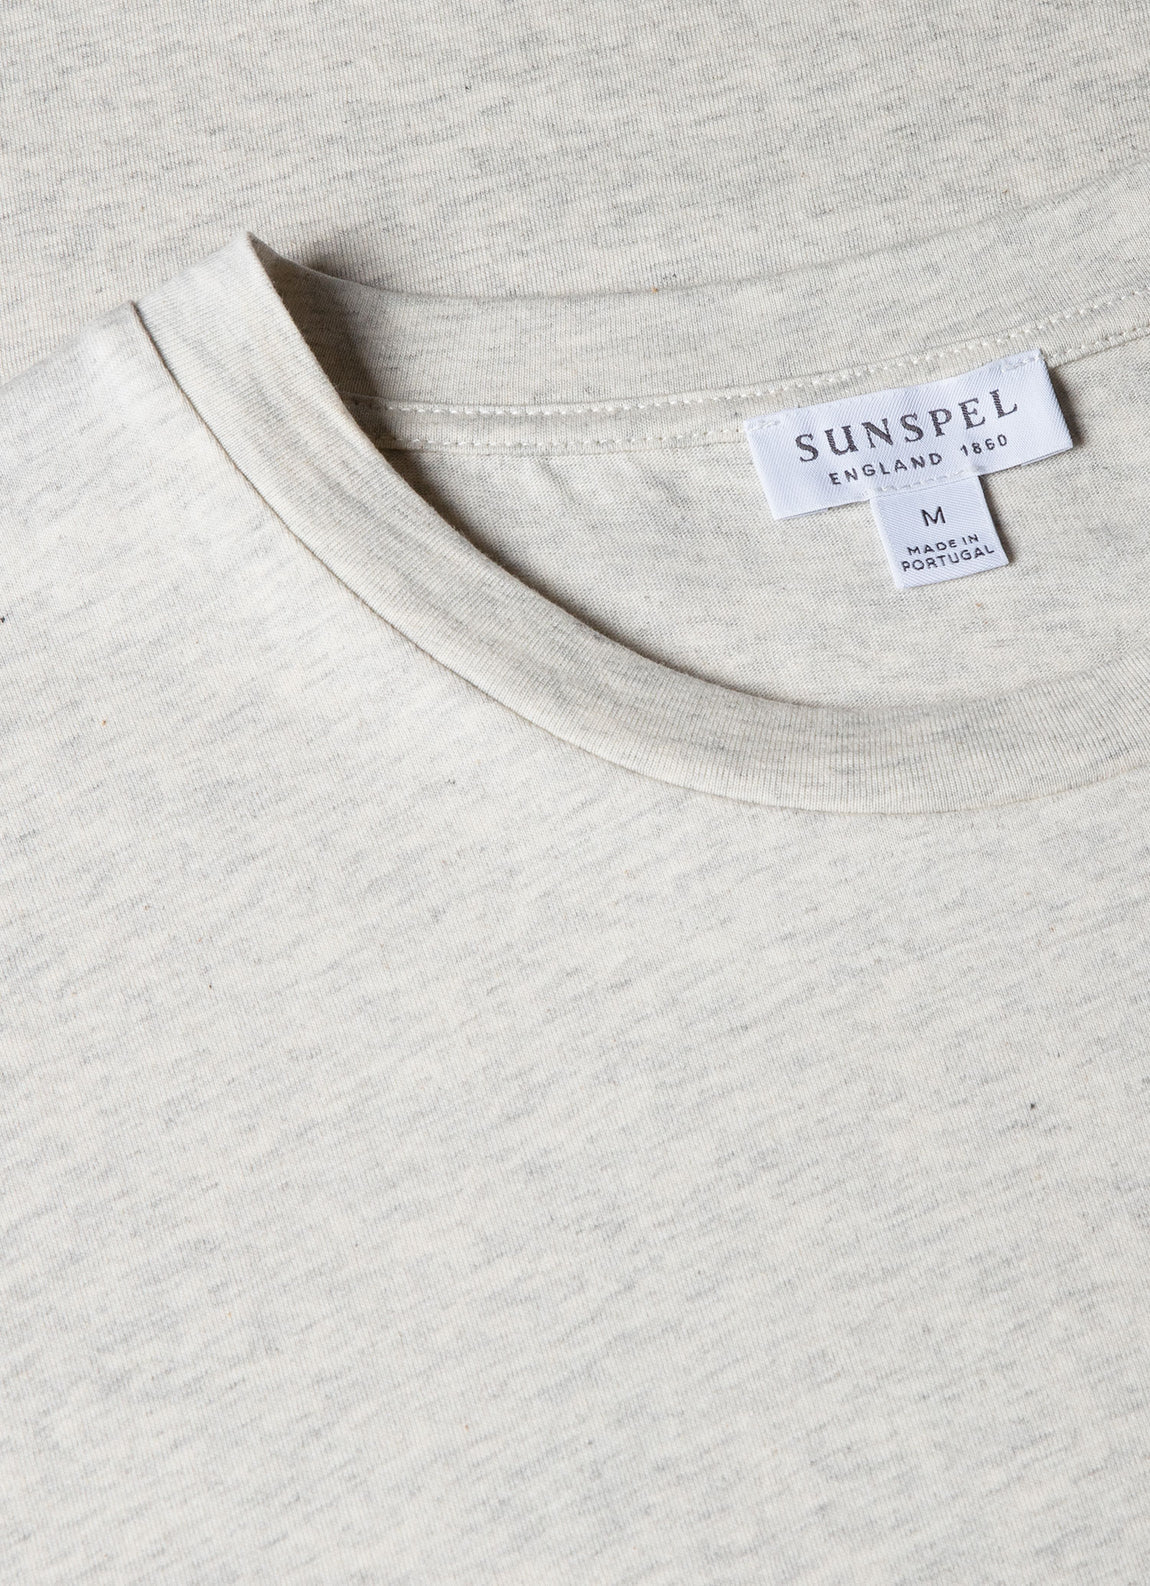 Men's Riviera Midweight T-shirt in Archive White Melange | Sunspel